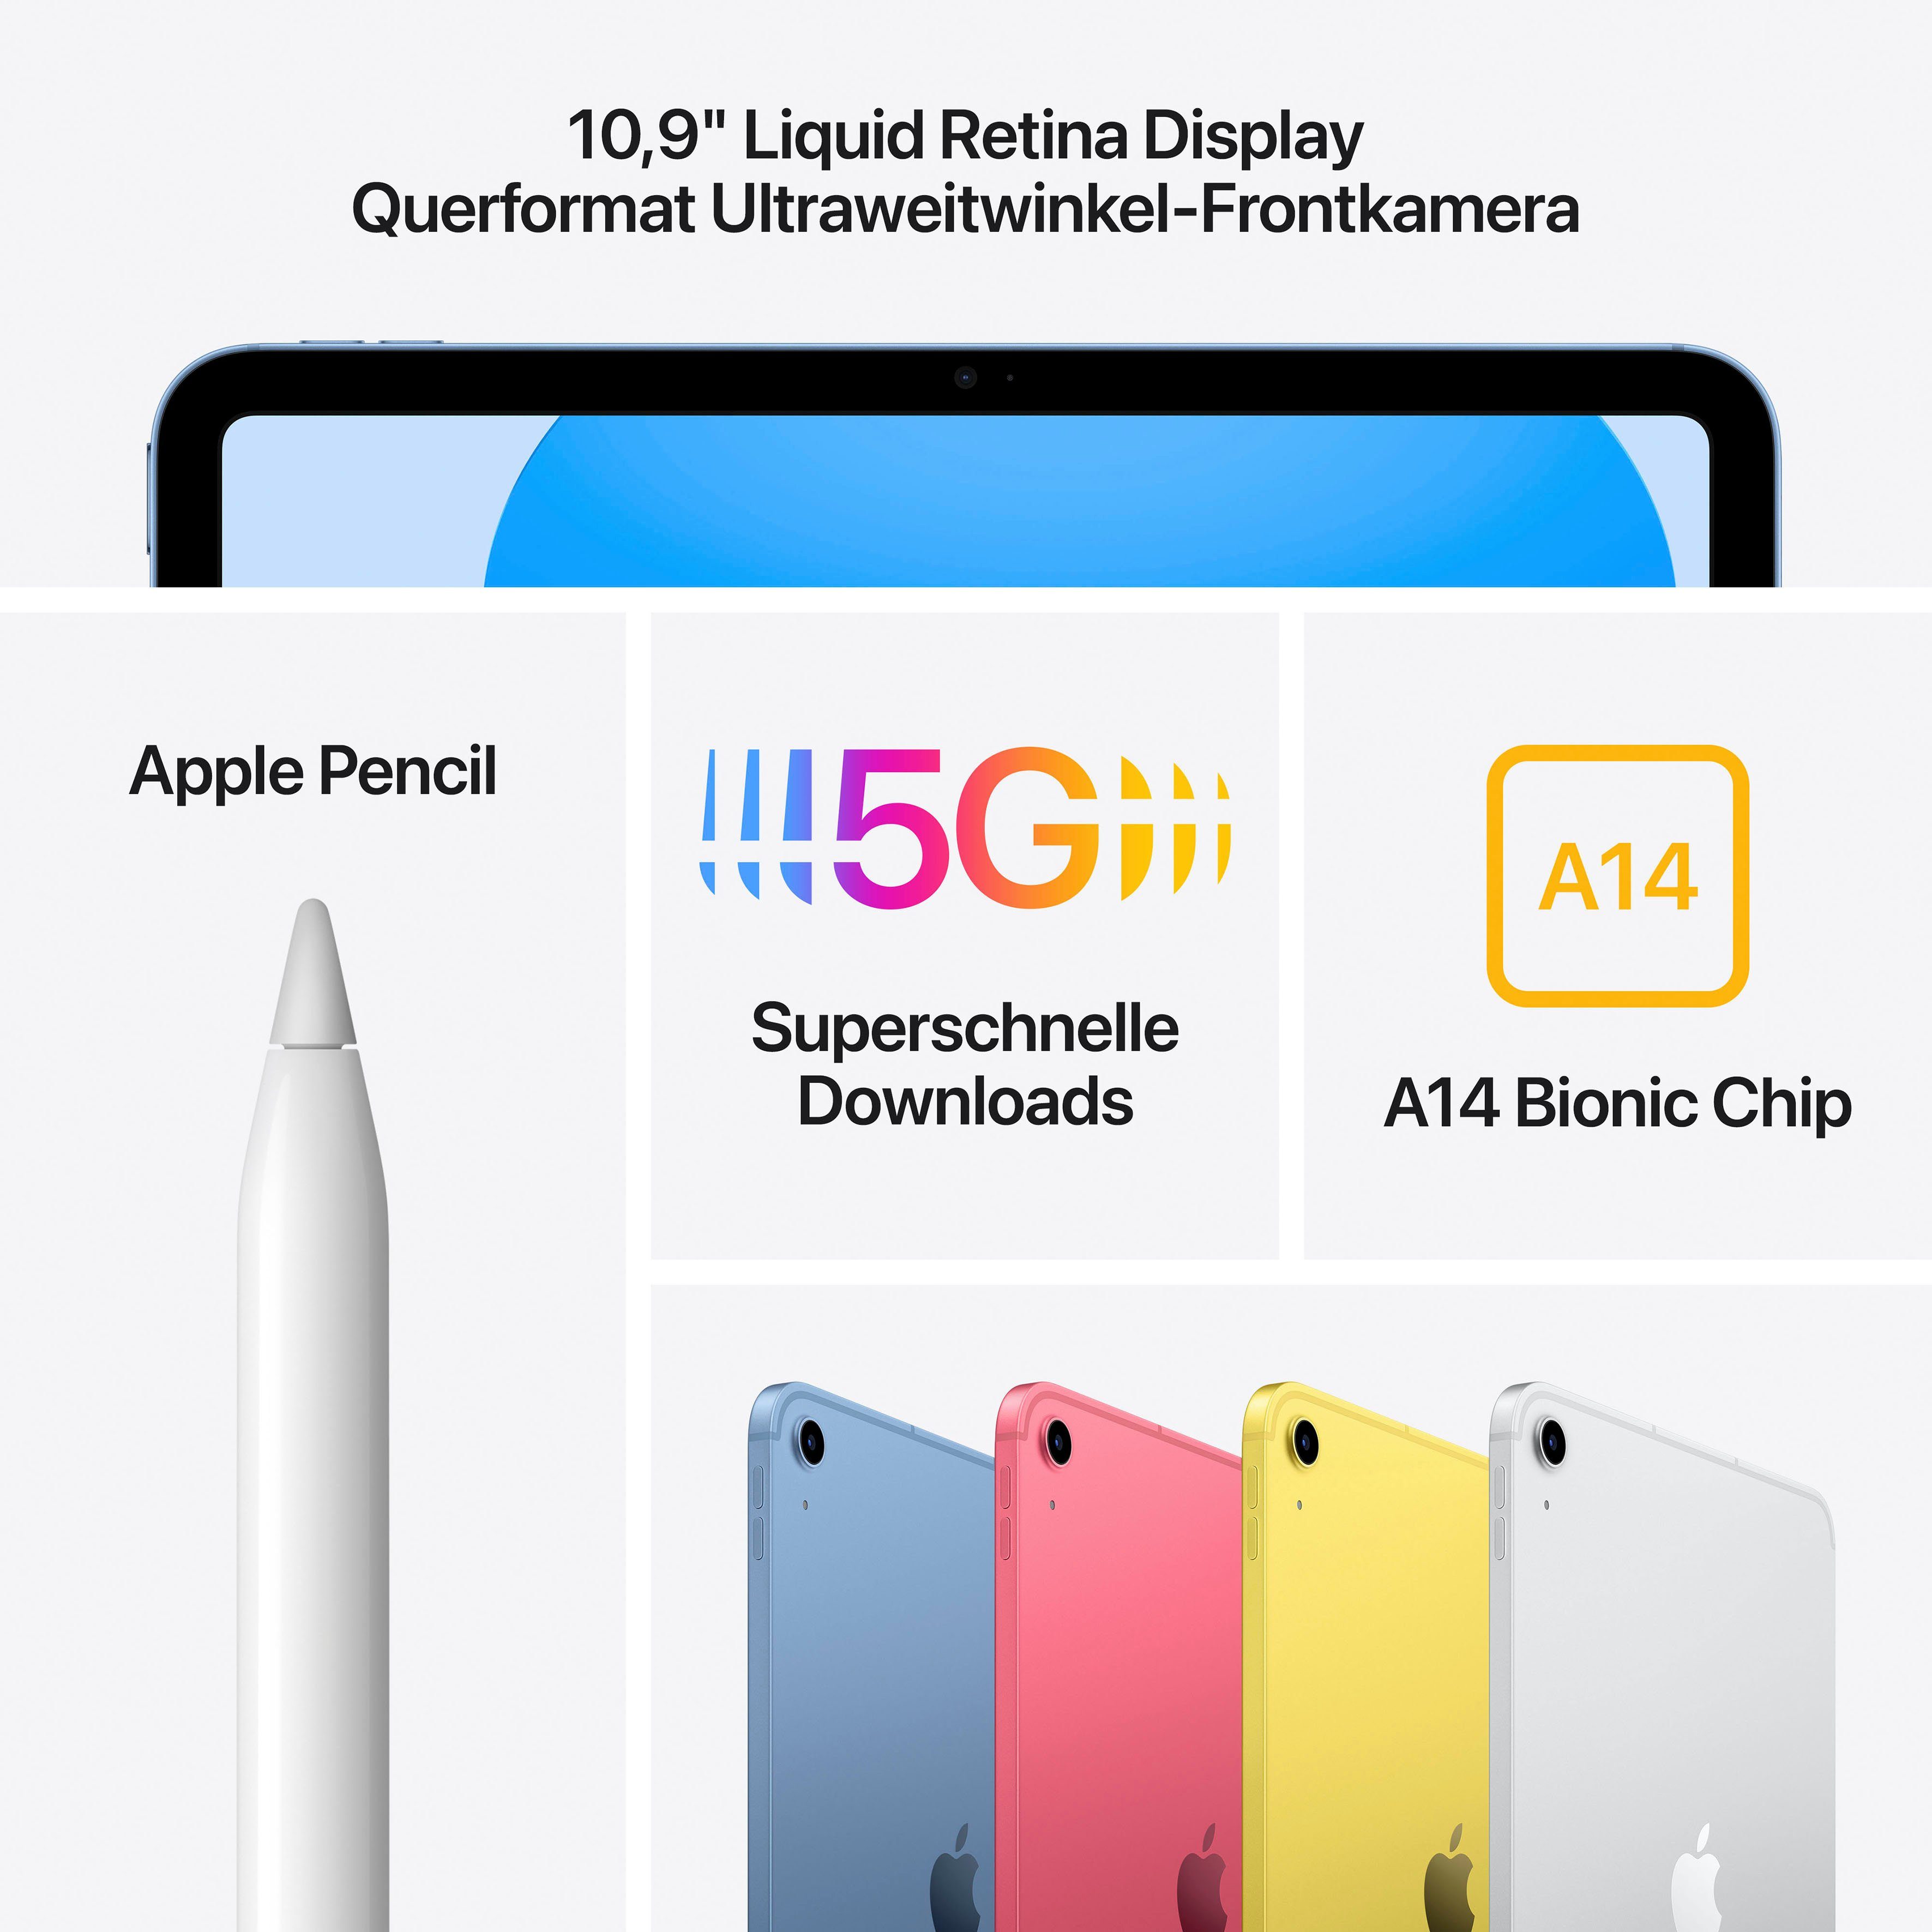 Apple iPad Tablet GB, 256 iPadOS, + (10 5G) Wi-Fi yellow (10,9", Cellular Generation) 2022